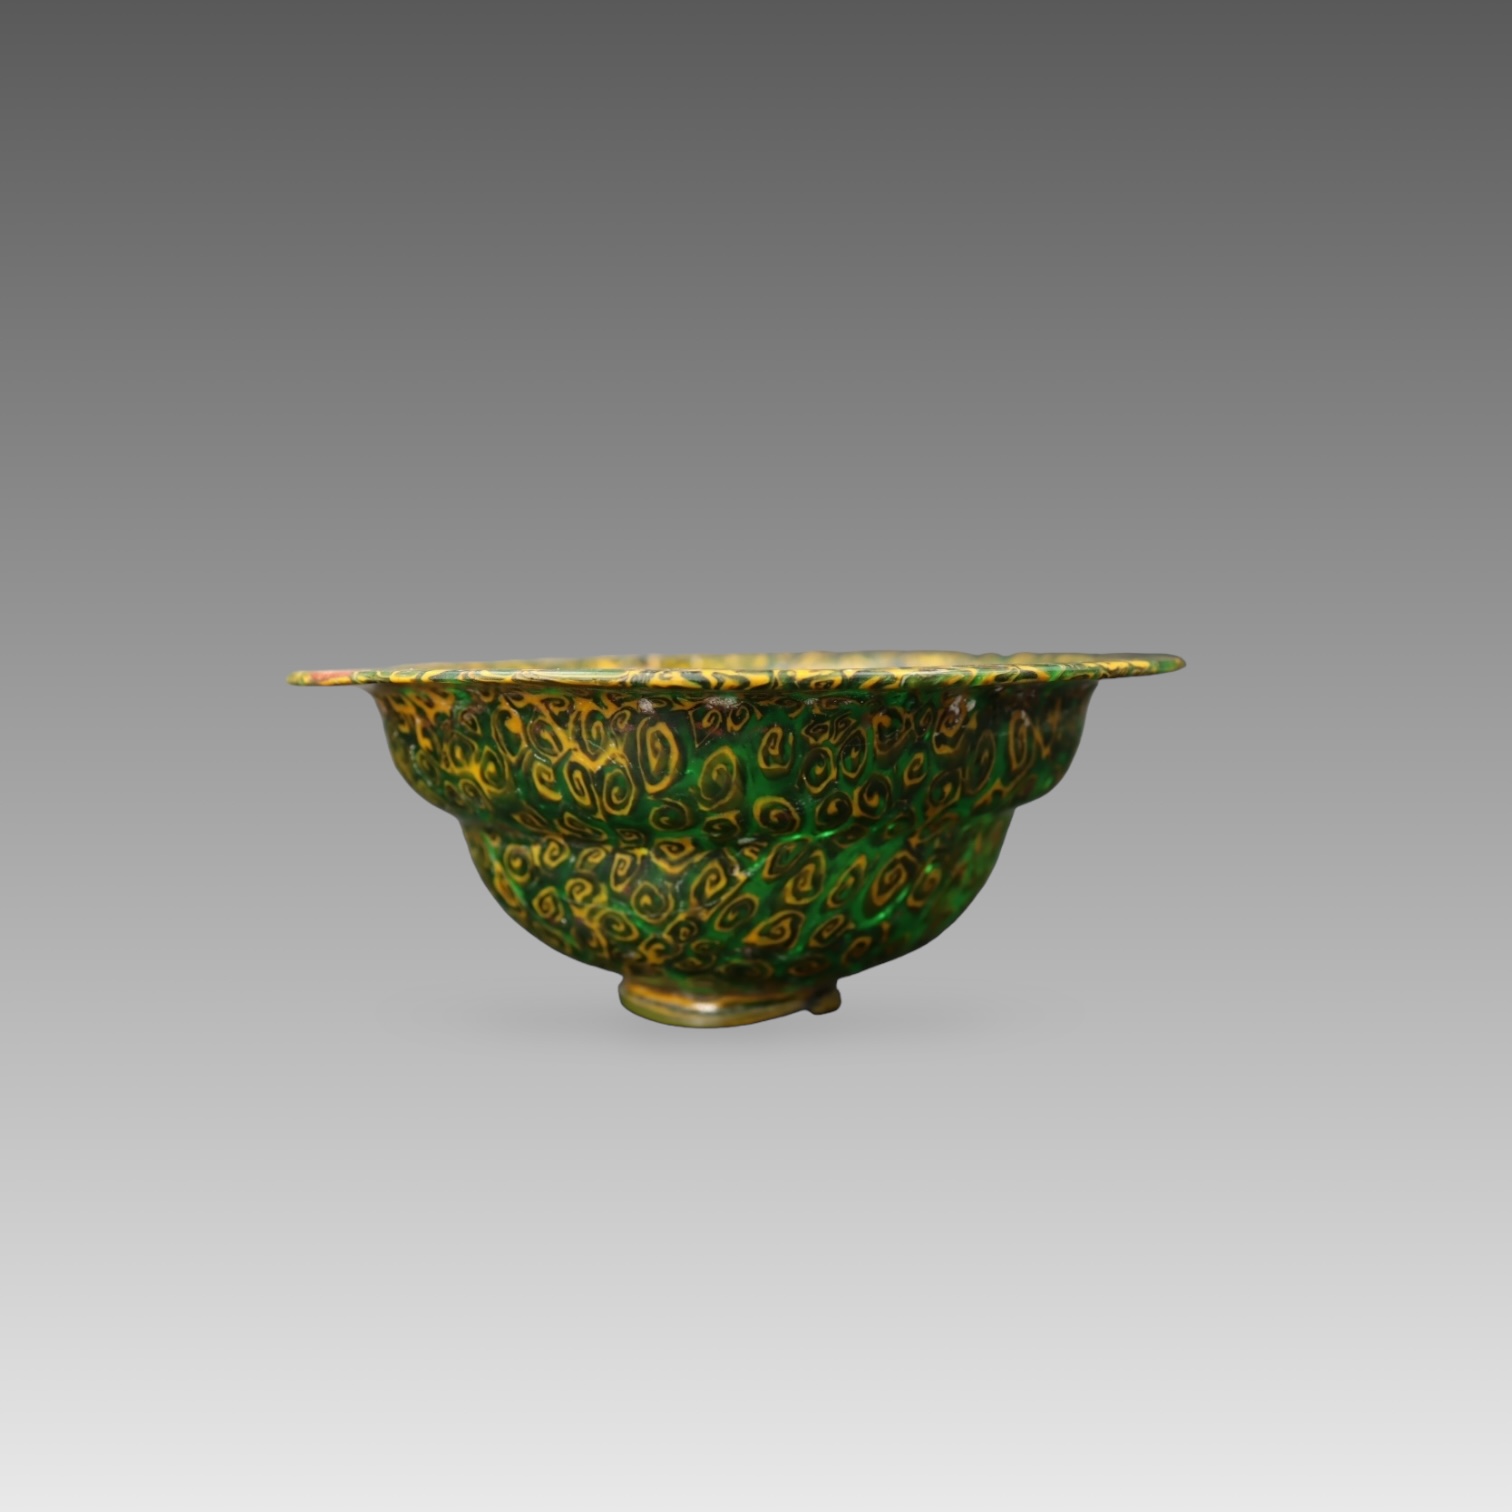 A Roman mosaic glass patella cup, probably Circa 1st Century BC - 1st Century AD